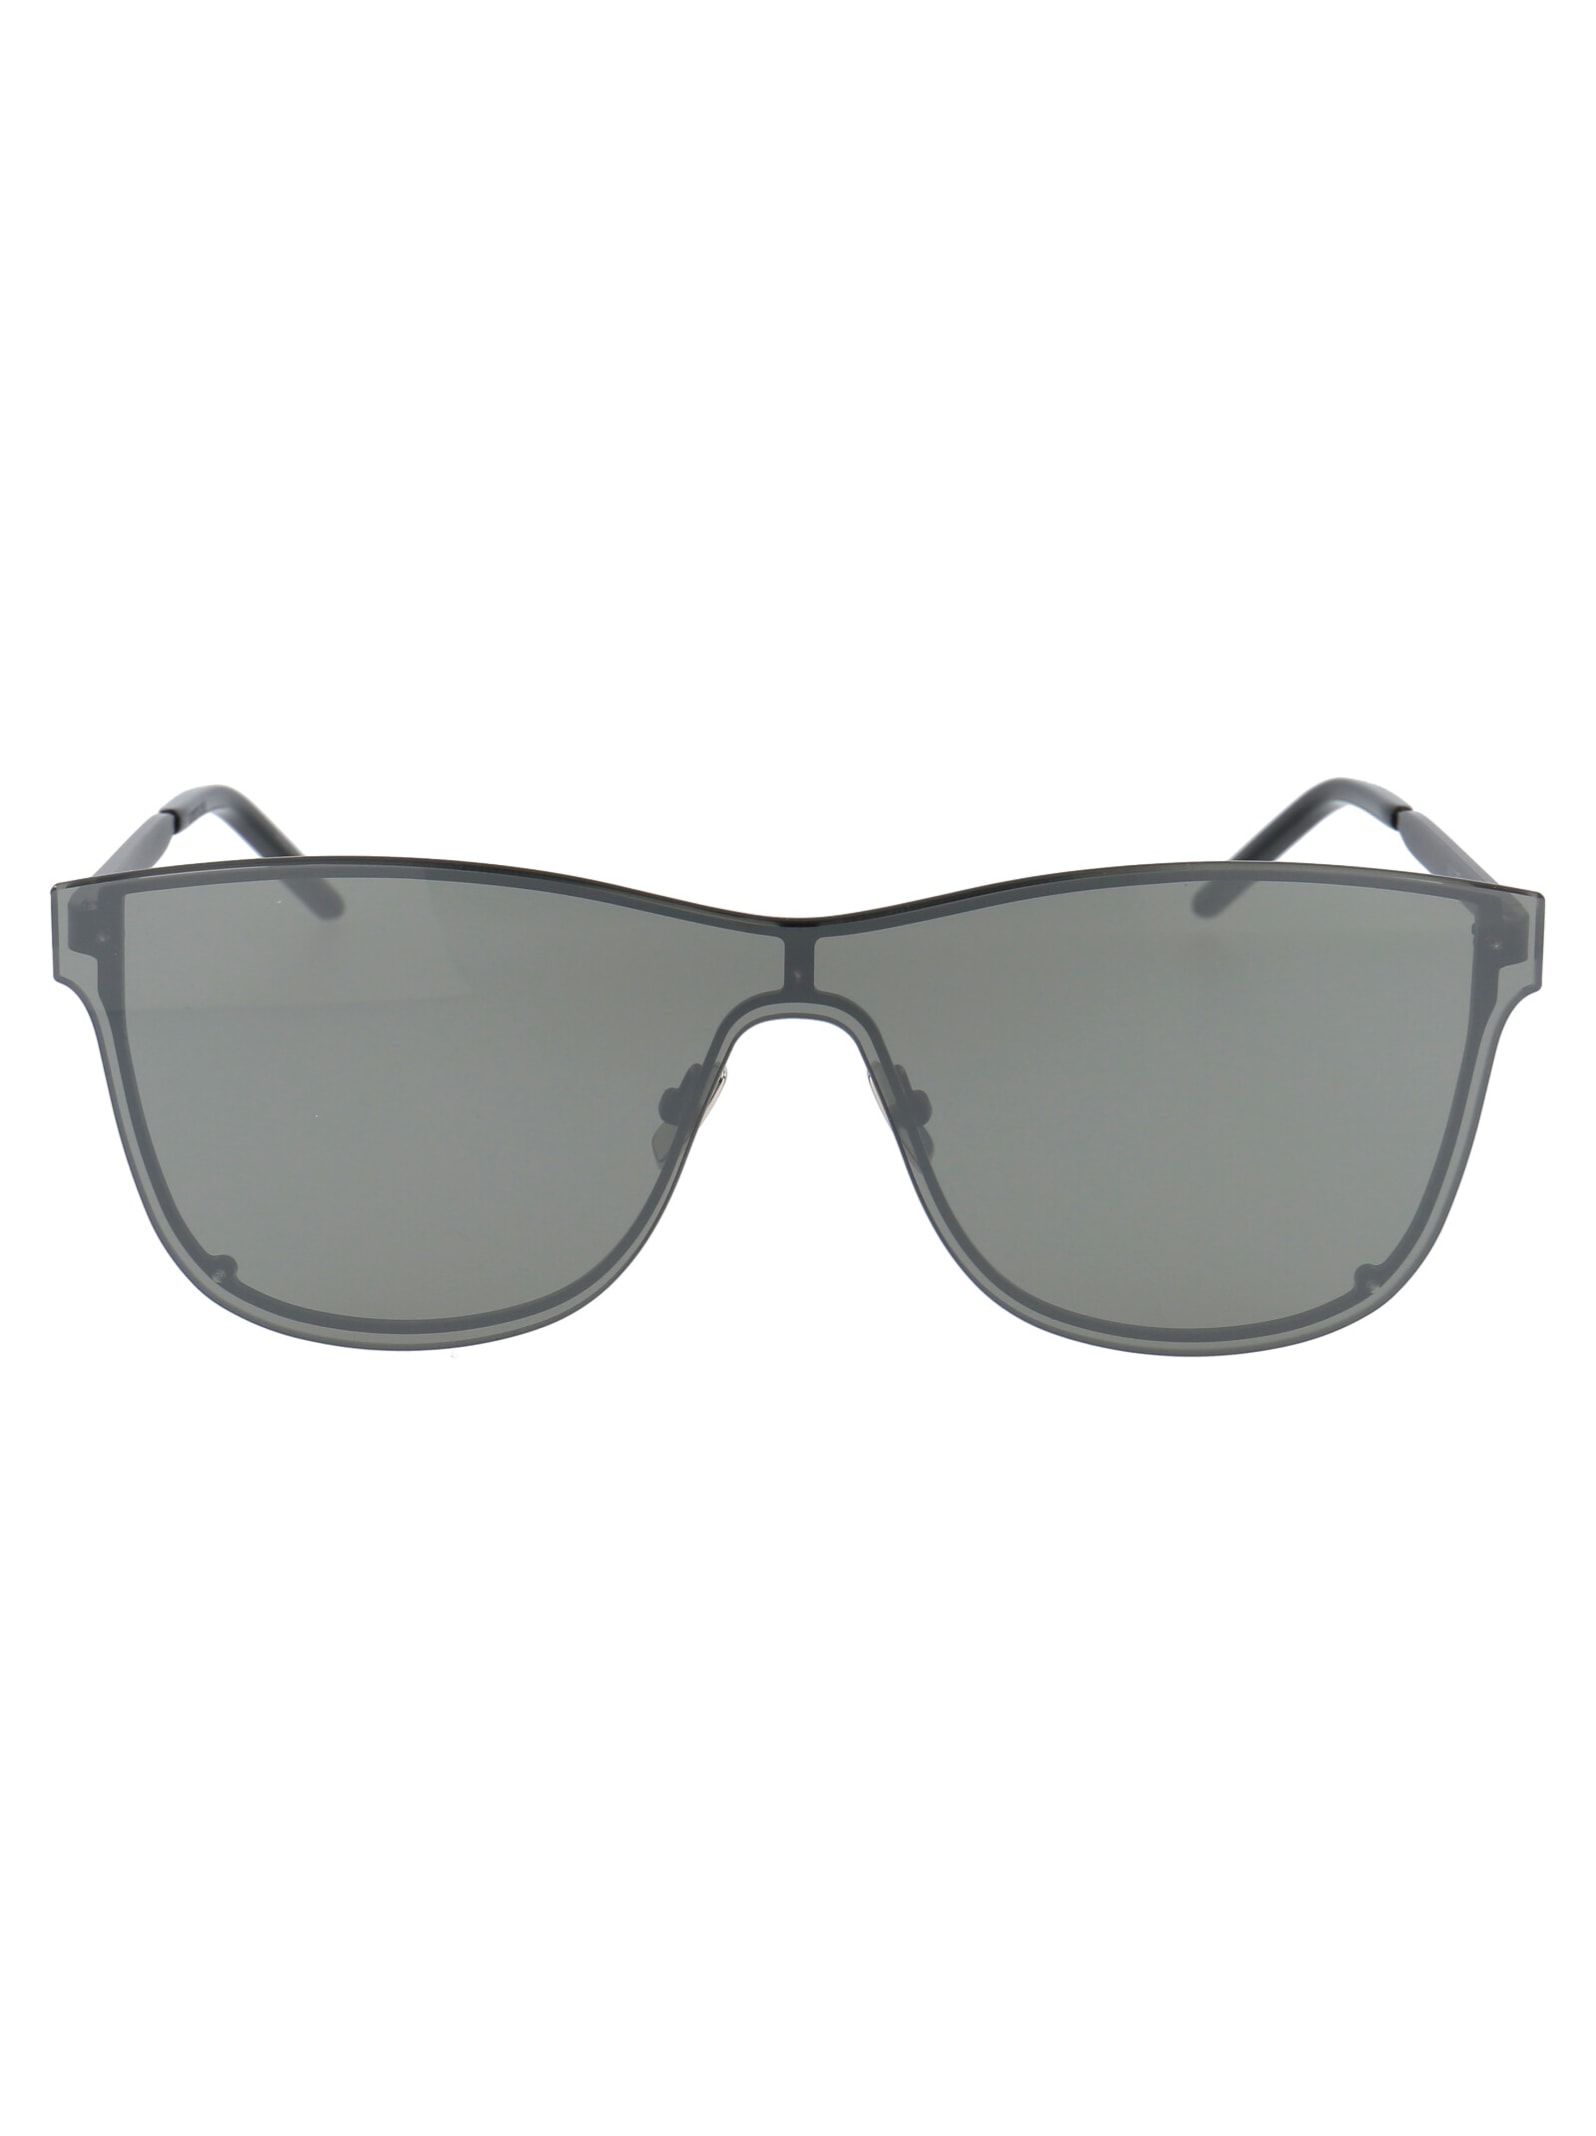 Saint Laurent Sl 51 Over Mask Sunglasses In 003 Black Black Silver